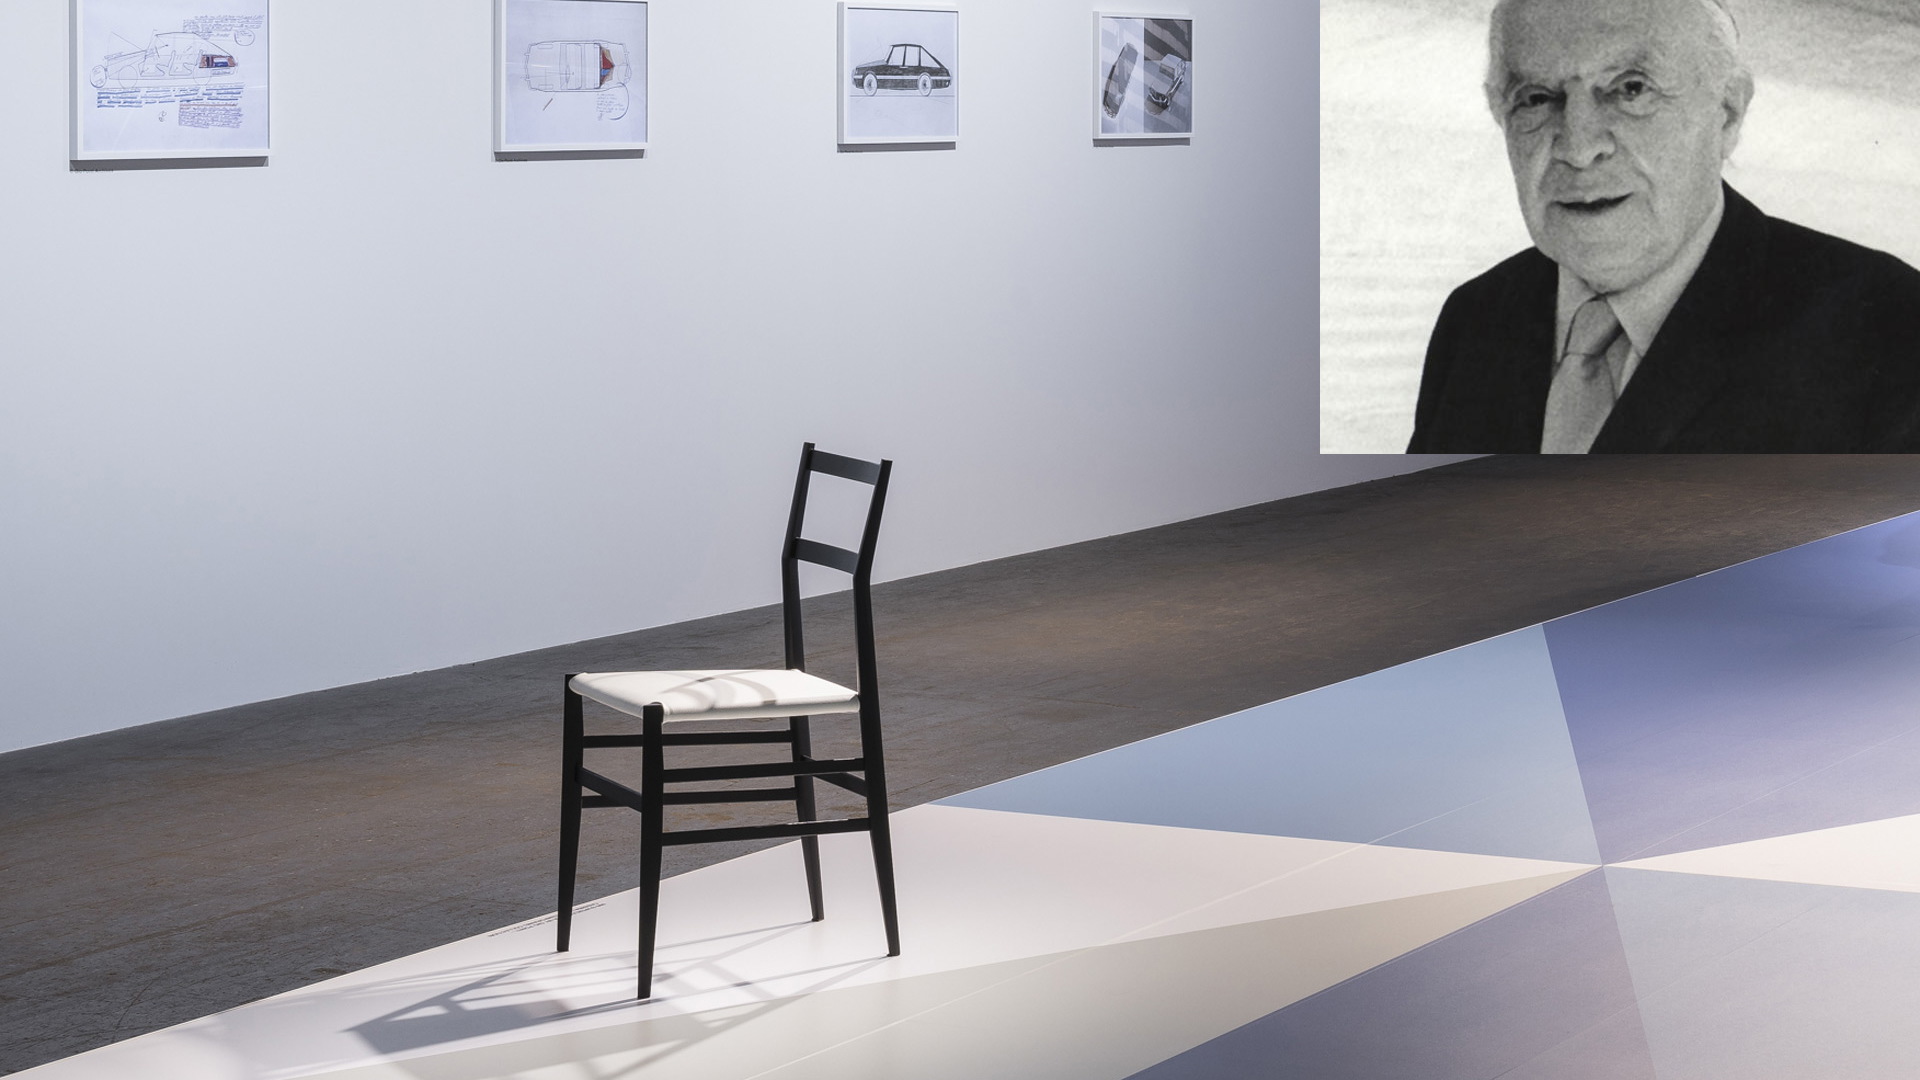 Gio Ponti's Superleggerea Chair at 2018 Grand Basel show